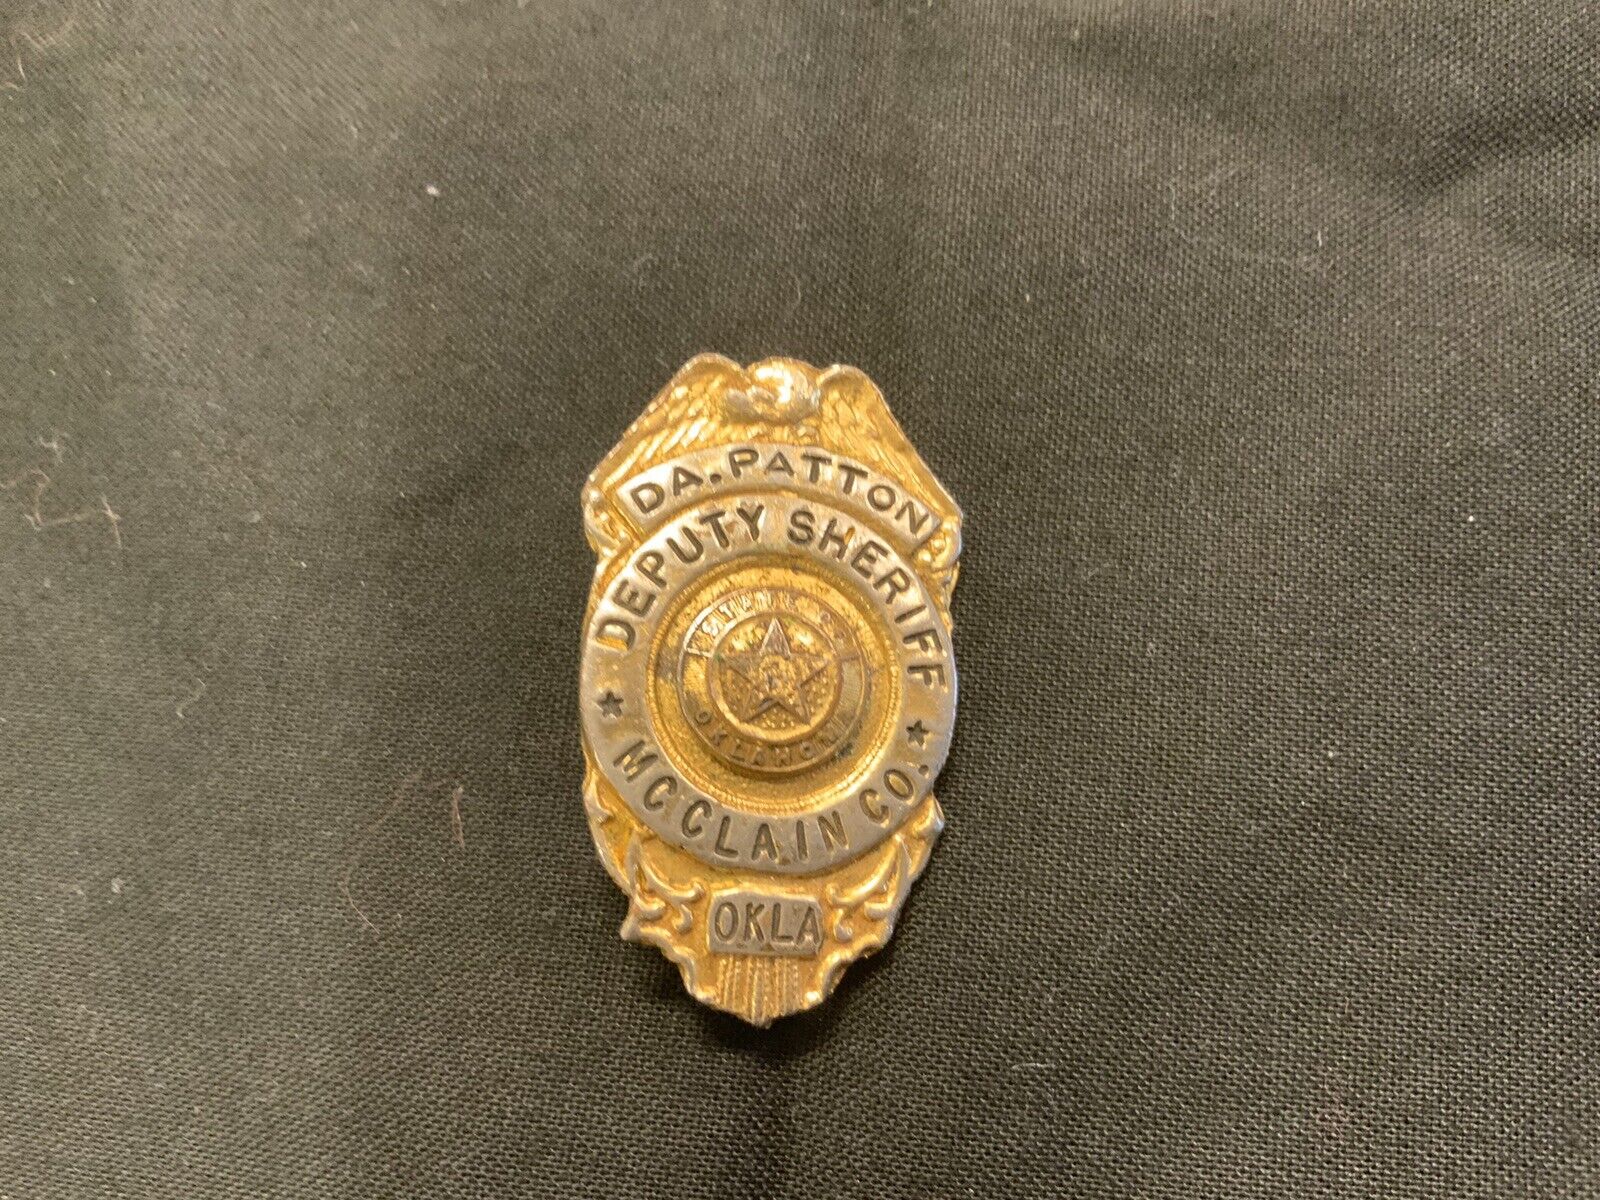 Vintage Miniature Police Badge “Deputy Sheriff” D.A. Patton McClain Co. Oklahoma